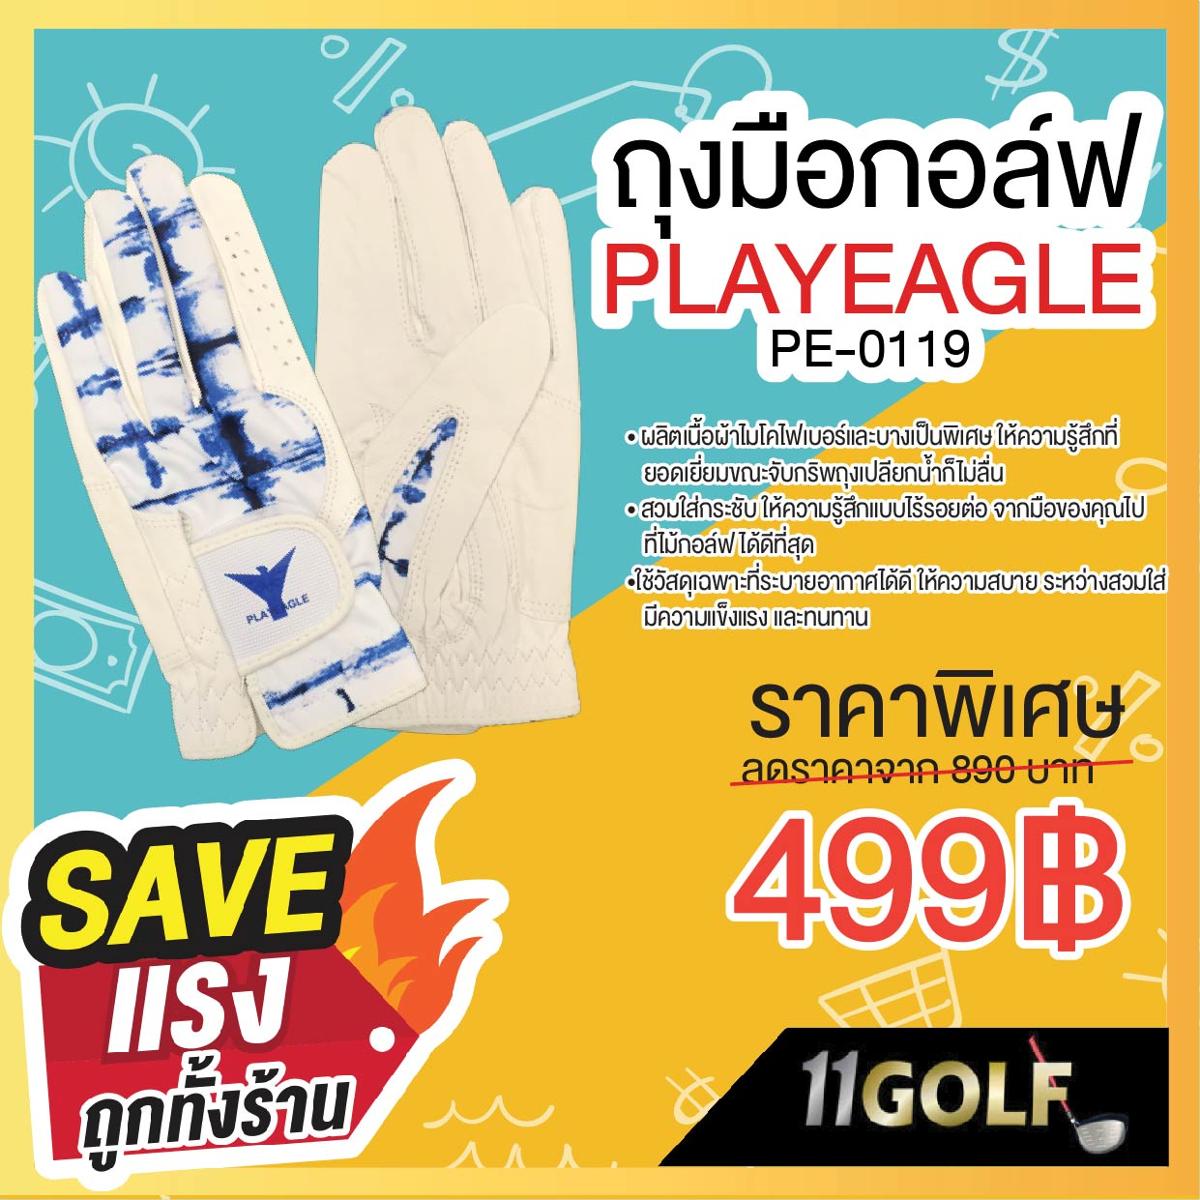 PLAYEAGLE  PE-0119 ถุงมือไม้กอล์ฟพรีเมี่ยม!!! ราคาถูกที่สุดในประเทศไทย!!! จัดส่งฟรีทั่วประเทศ